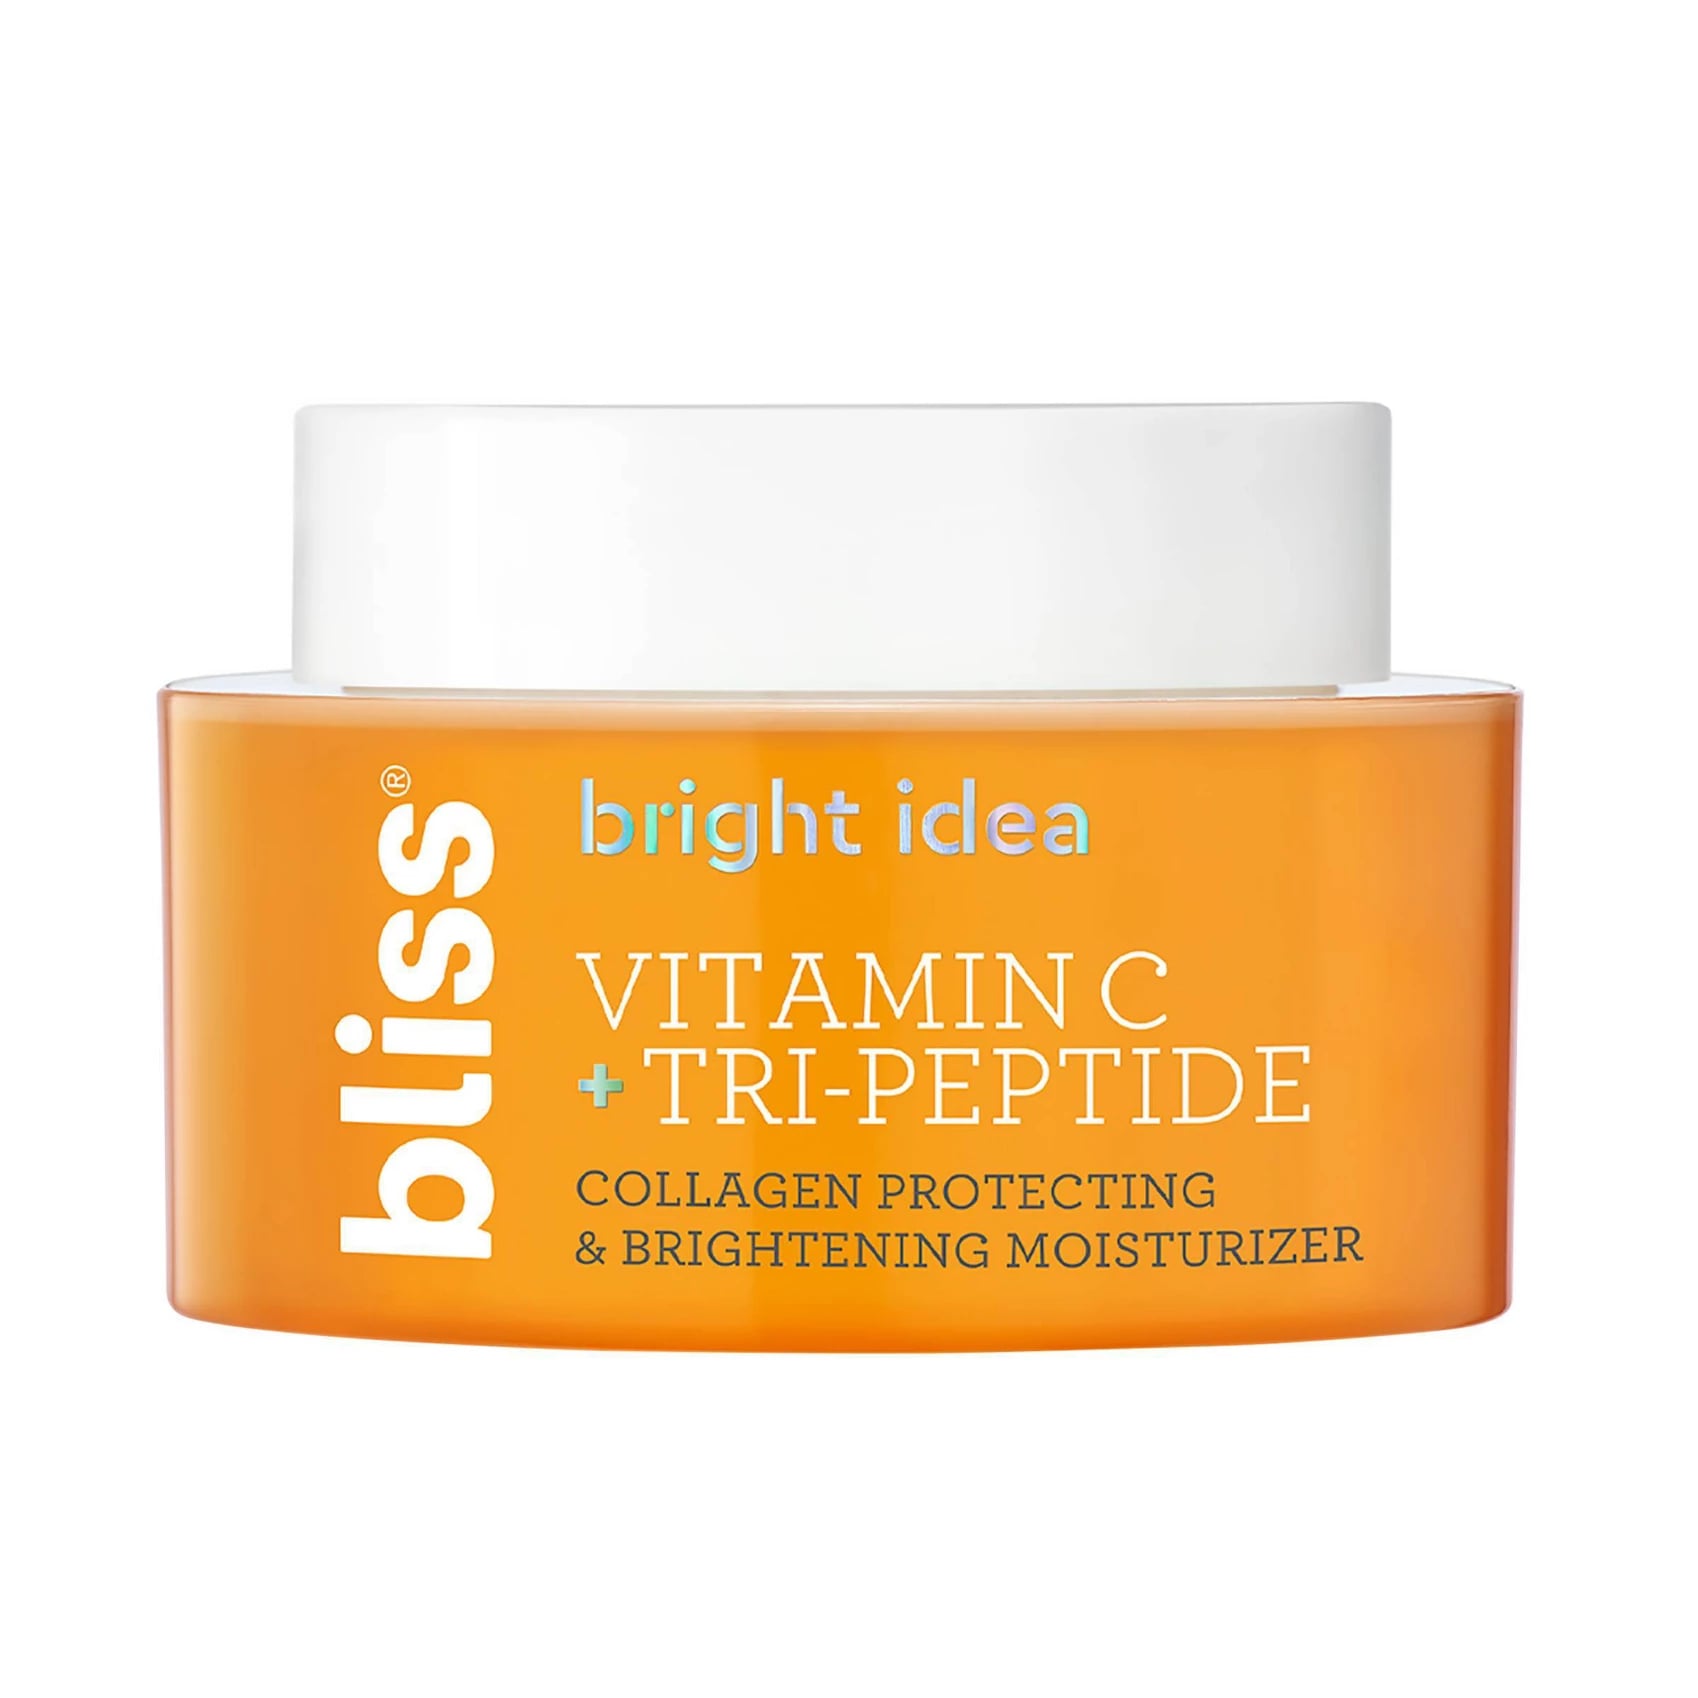 March 19: Bliss Bright Idea Vitamin C + Tri-Peptide Collagen Protecting & Brightening Moisturizer